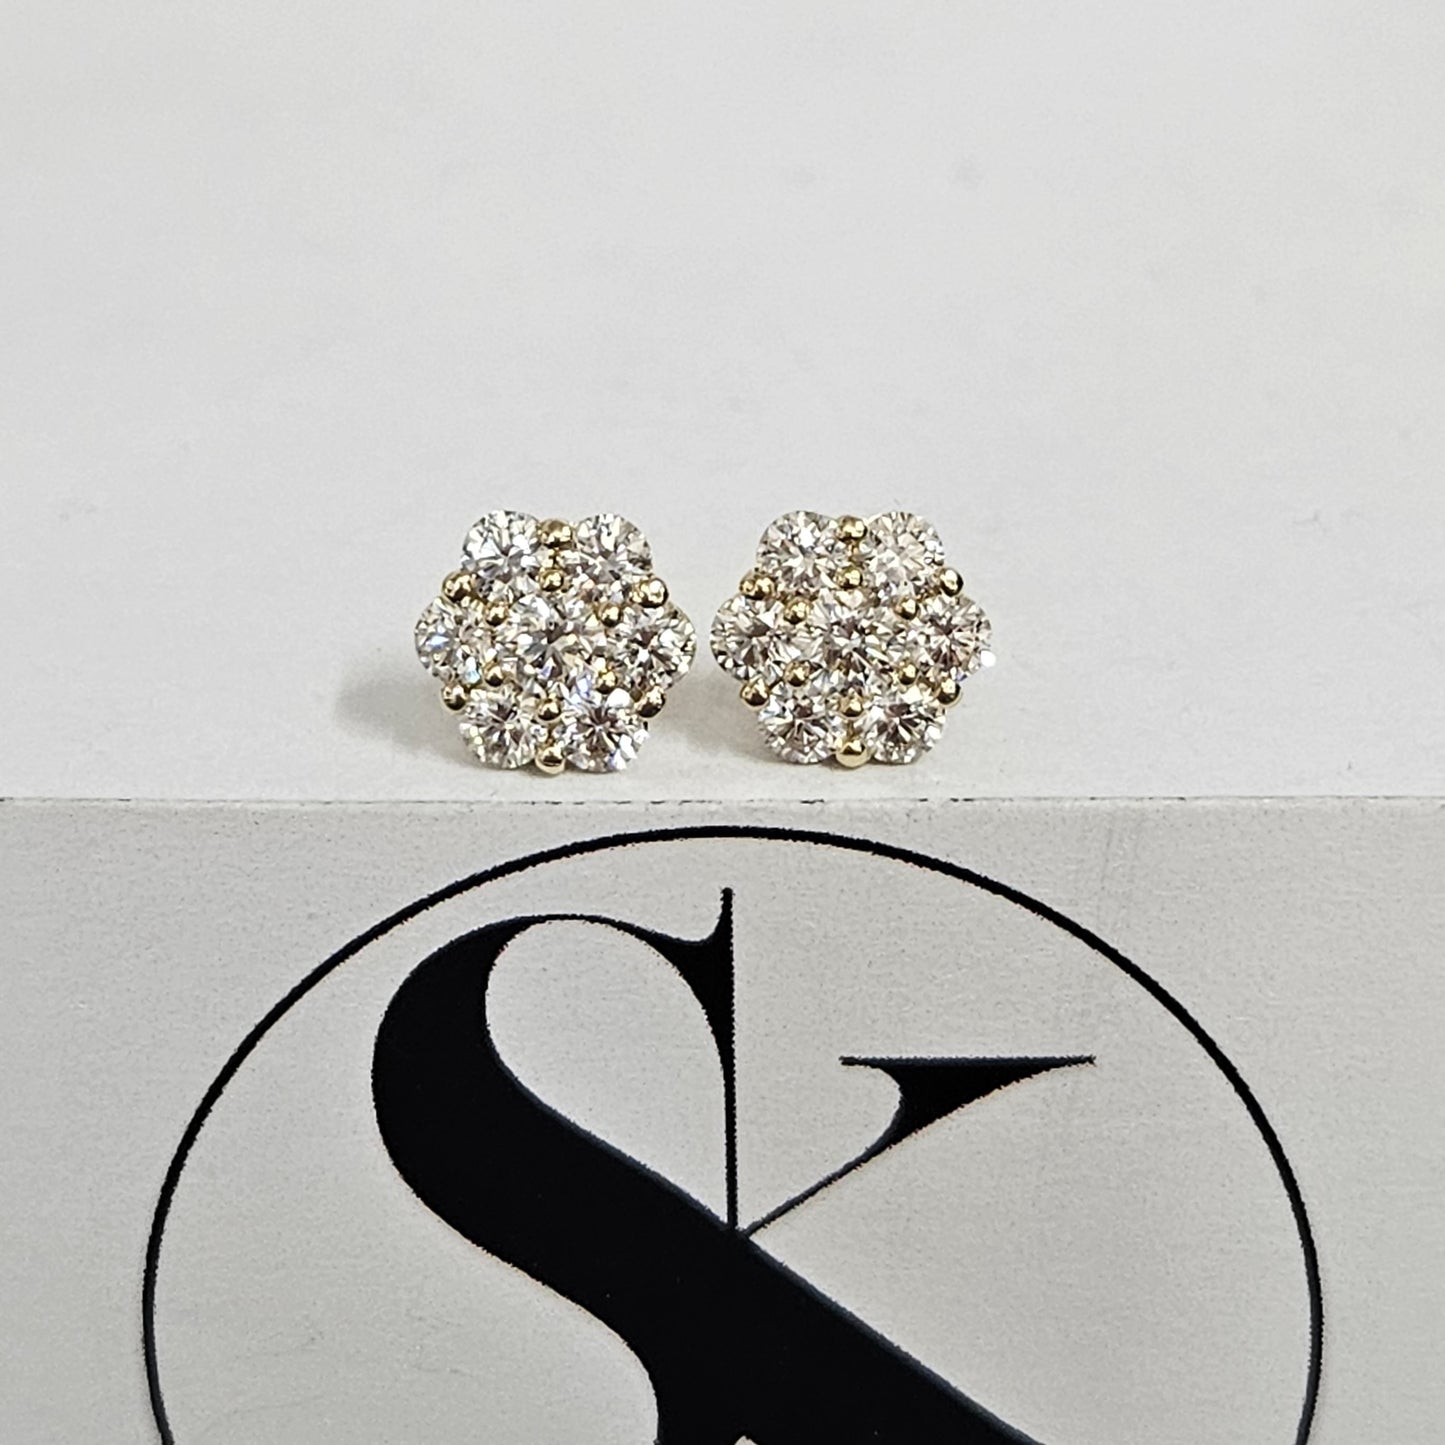 1.1ct Diamond Cluster Earrings/Natural Diamond  European lock closure Earrings / 14K ,18K gold Halo 8.2mm Stud Earrings/Anniversary gift